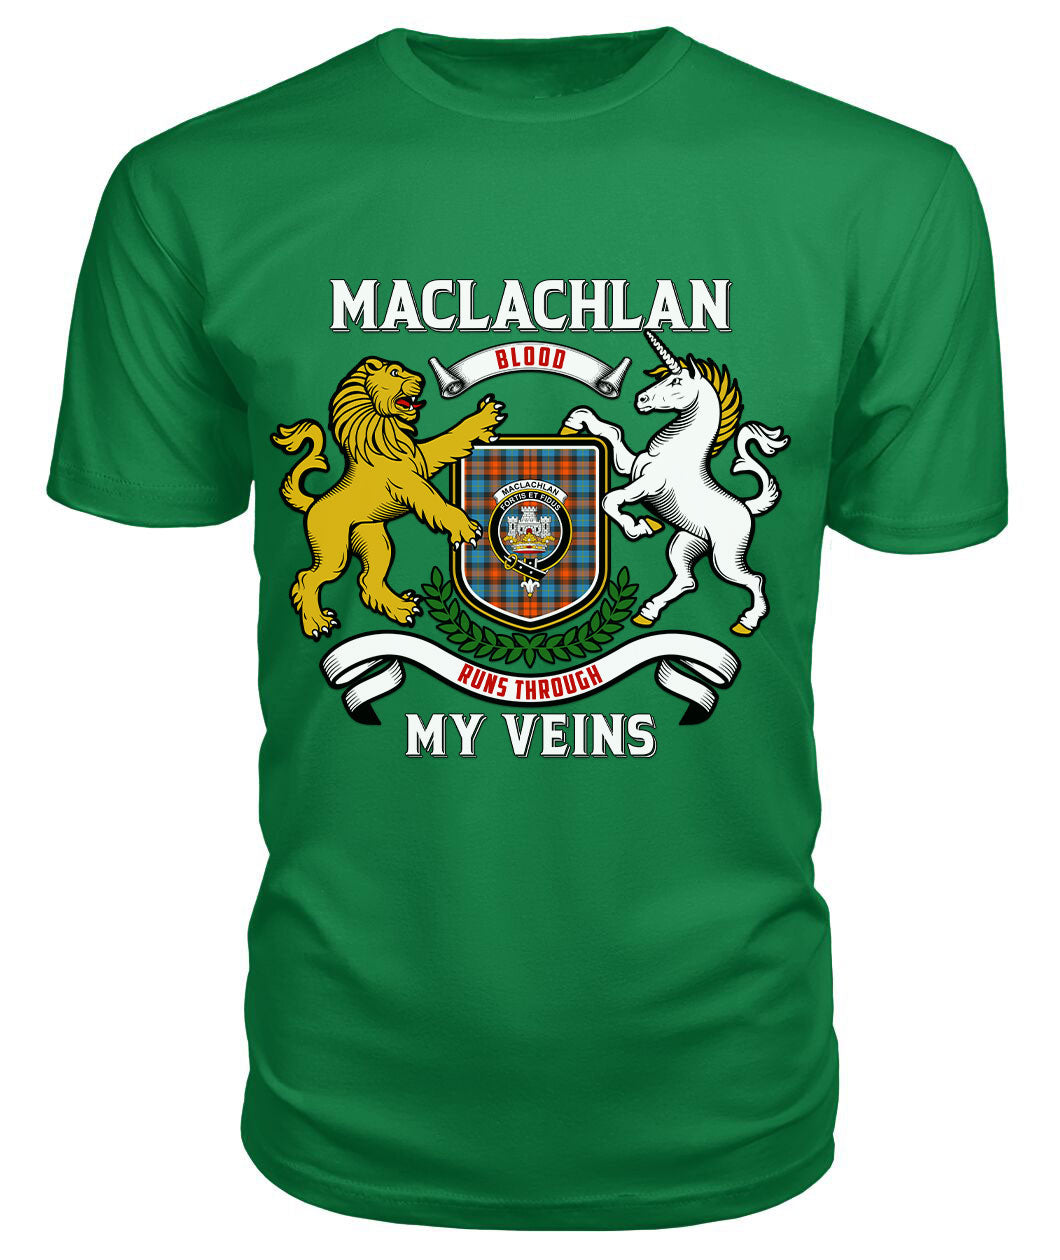 MacLachlan Ancient Tartan Crest 2D T-shirt - Blood Runs Through My Veins Style